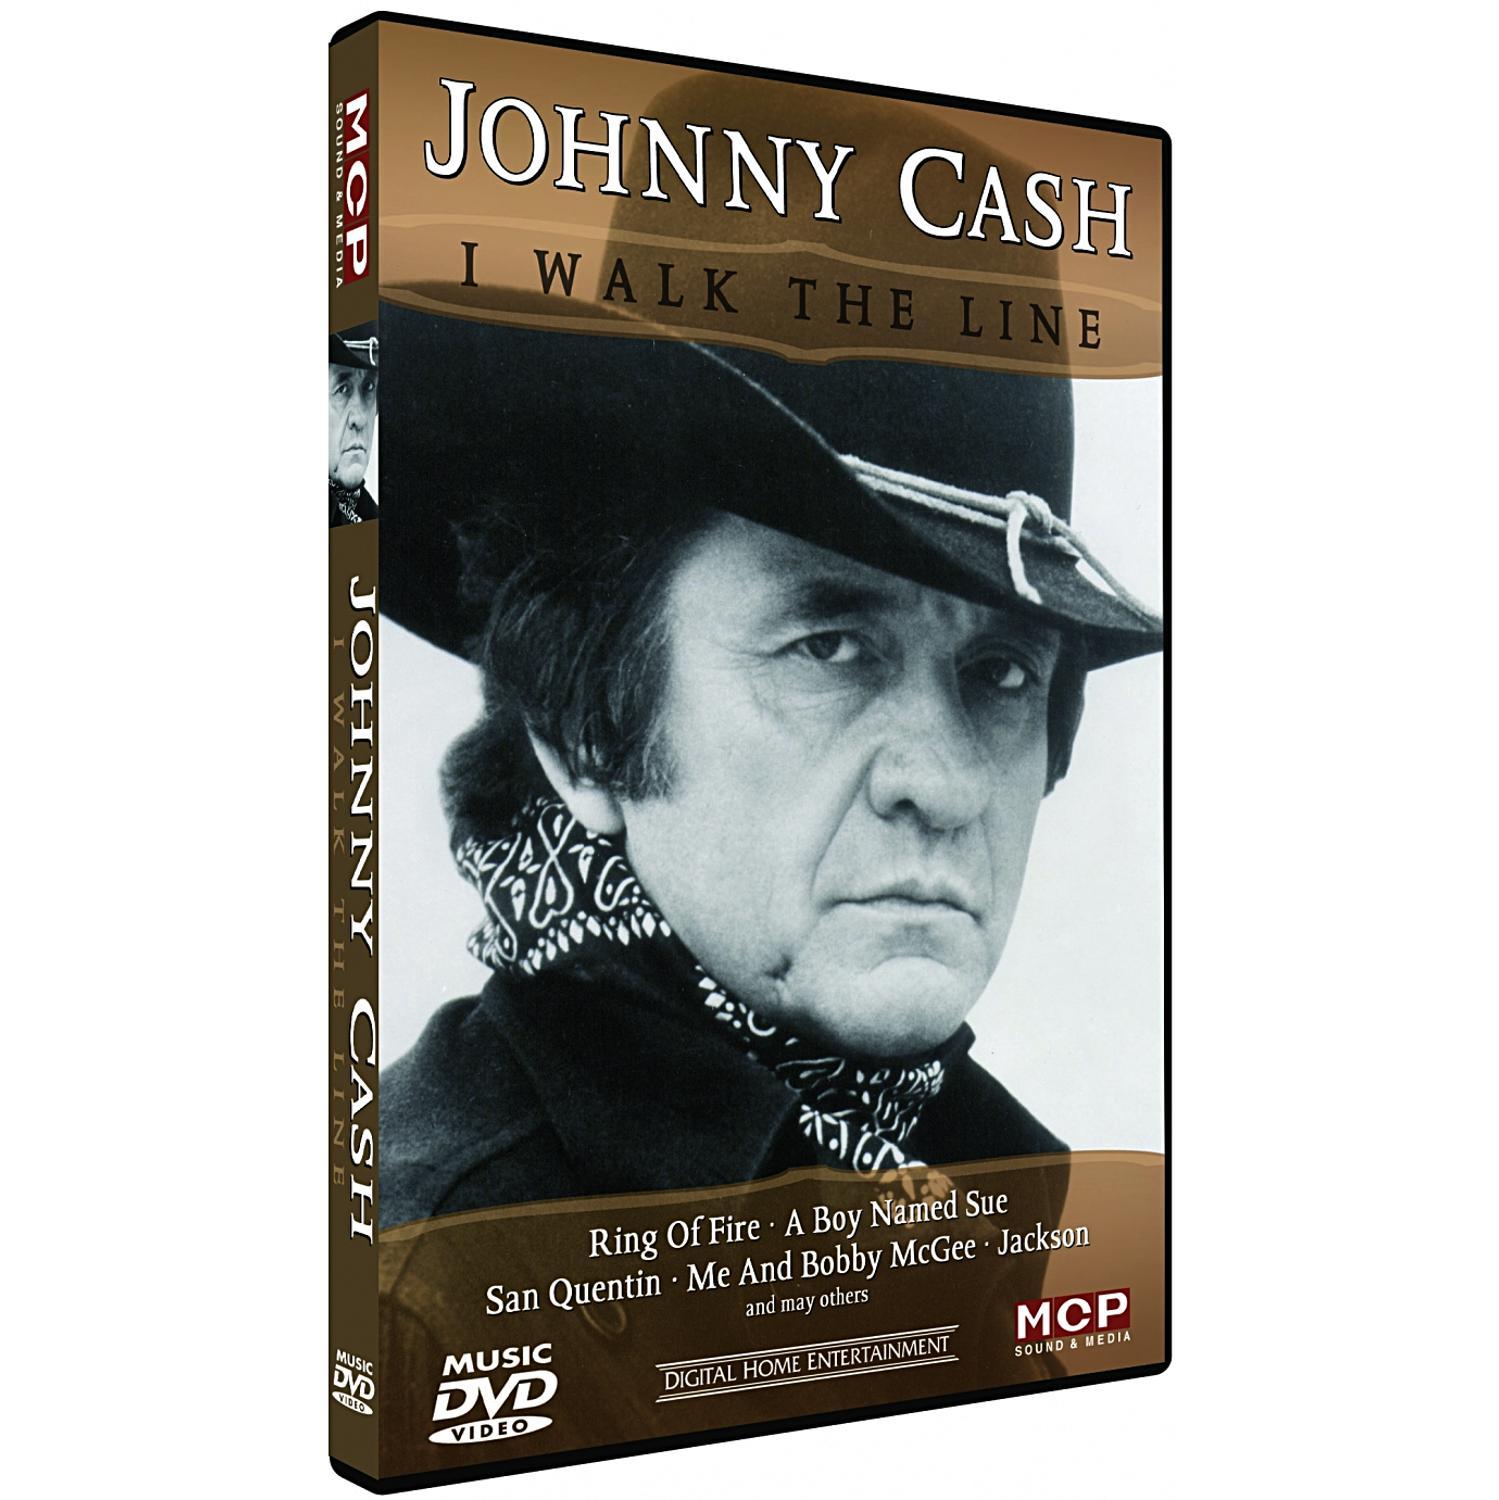 Line I (DVD) - Walk Johnny Cash - The